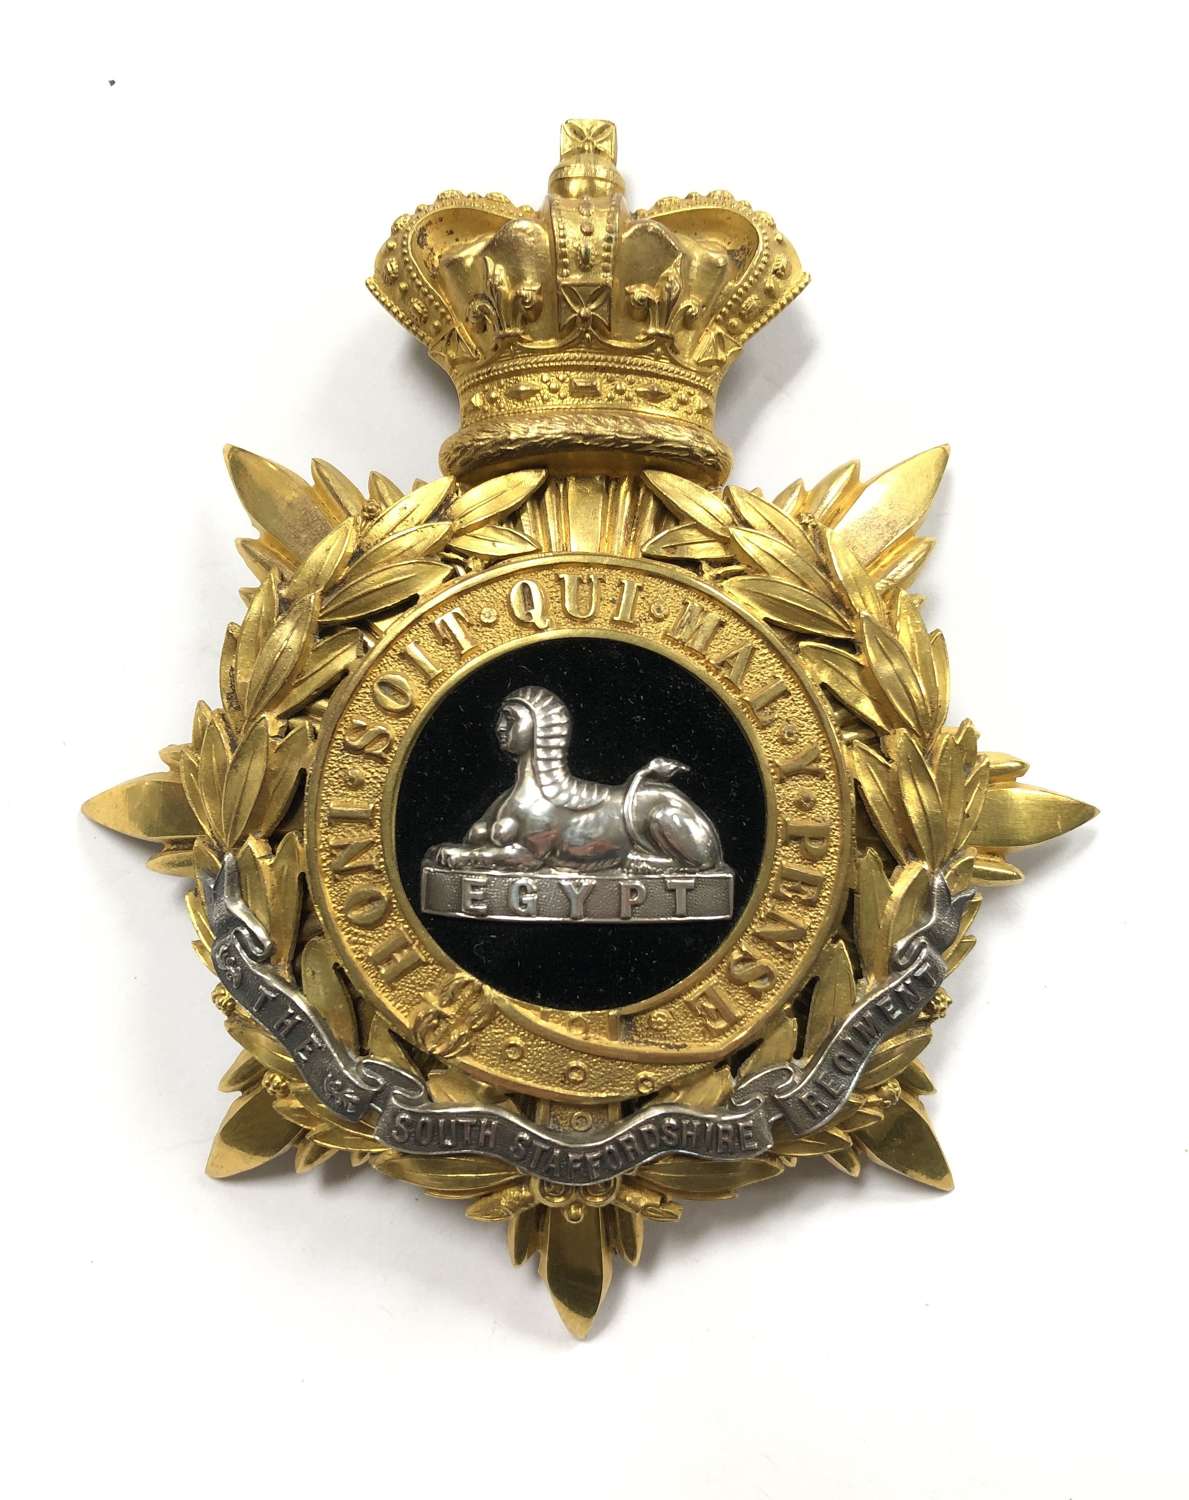 South Staffordshire Regiment Victorian Officer’s helmet plate